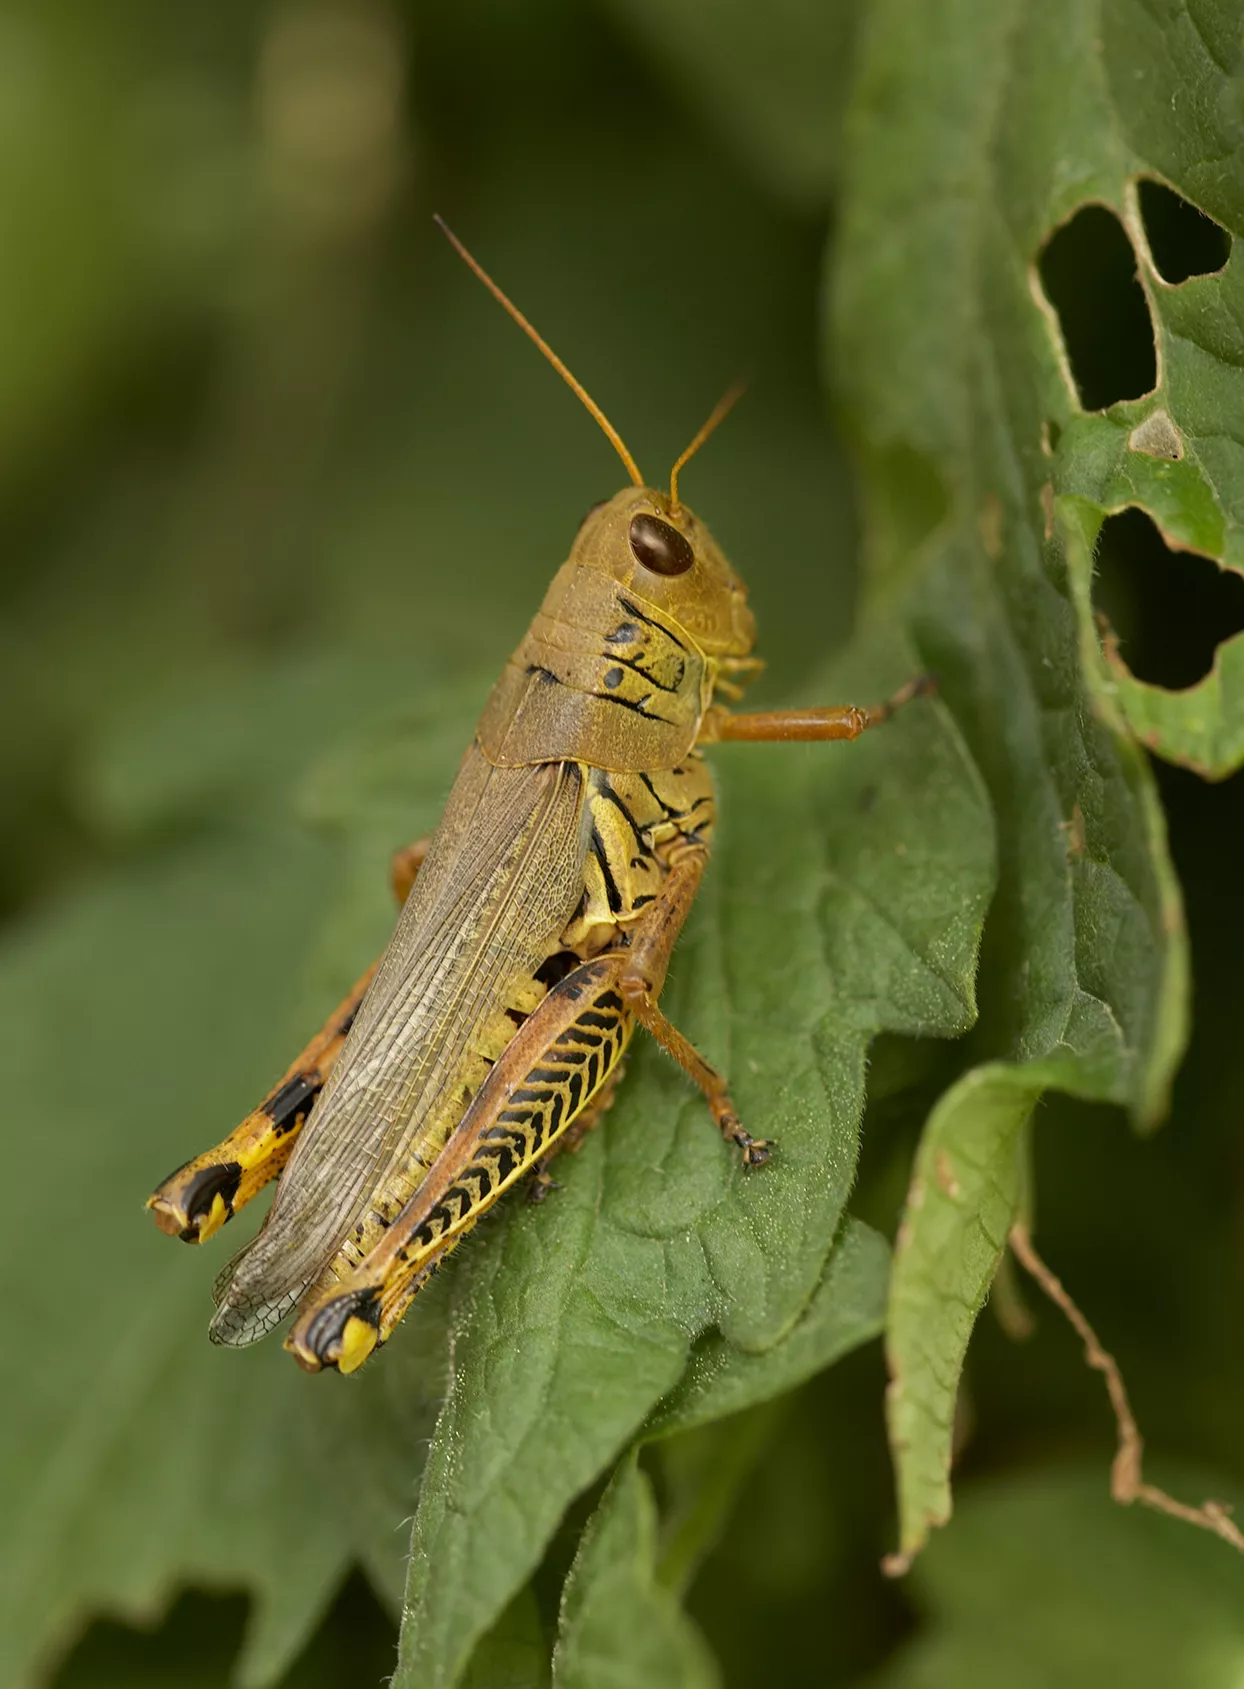 large grasshopper sitting on leaf with hole damage in garden